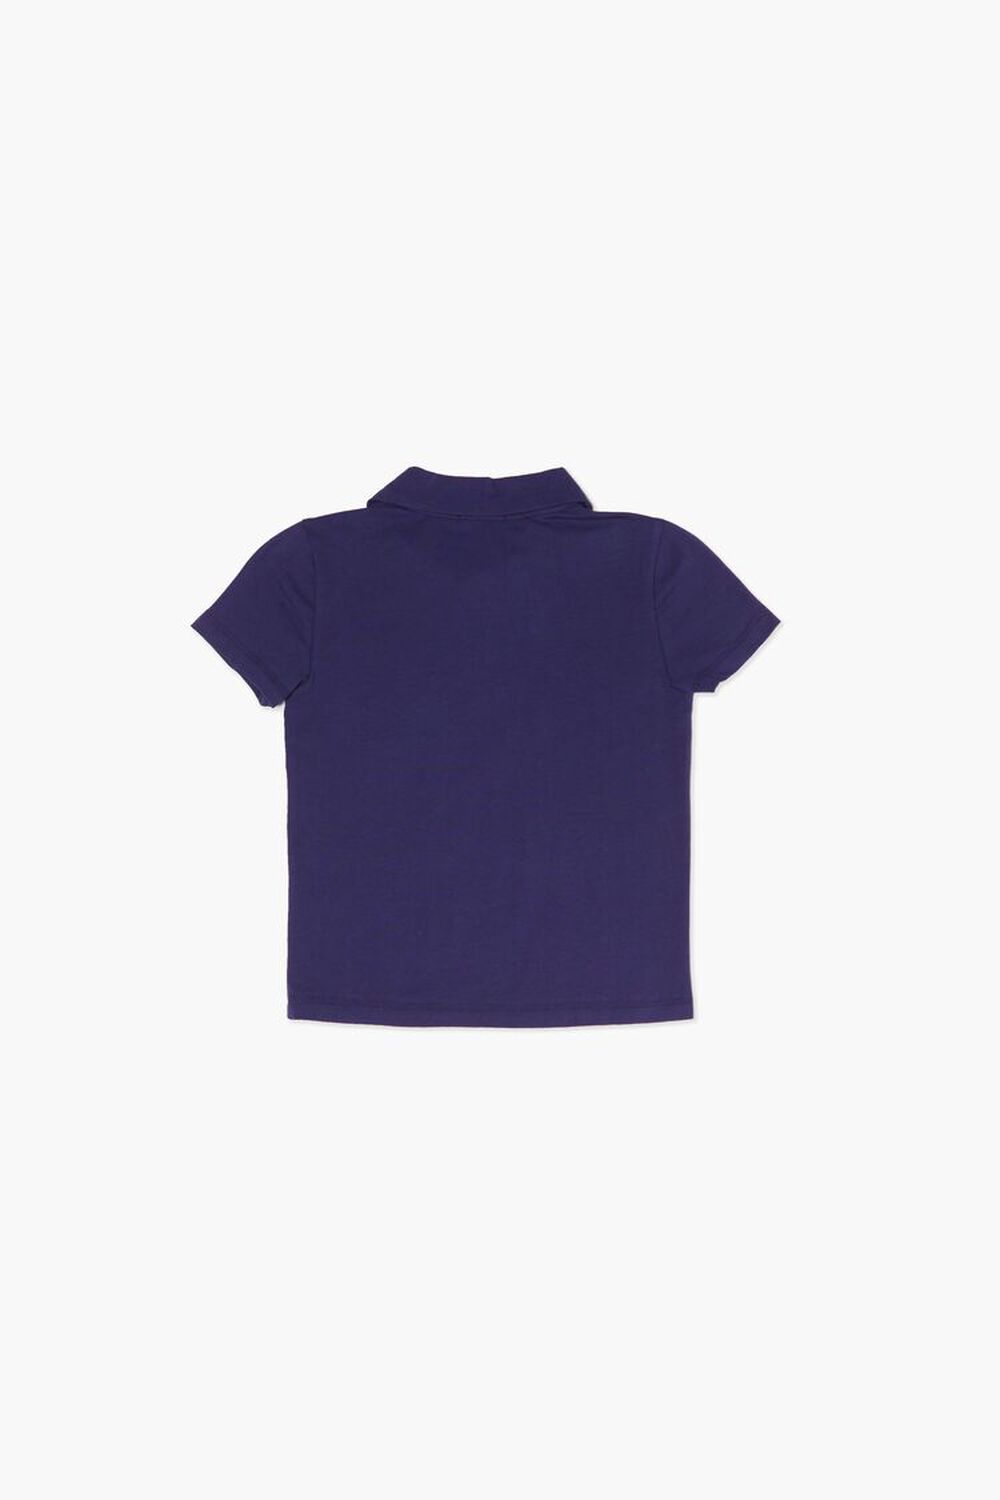 NAVY Girls Cotton-Blend Polo Shirt (Kids), image 2